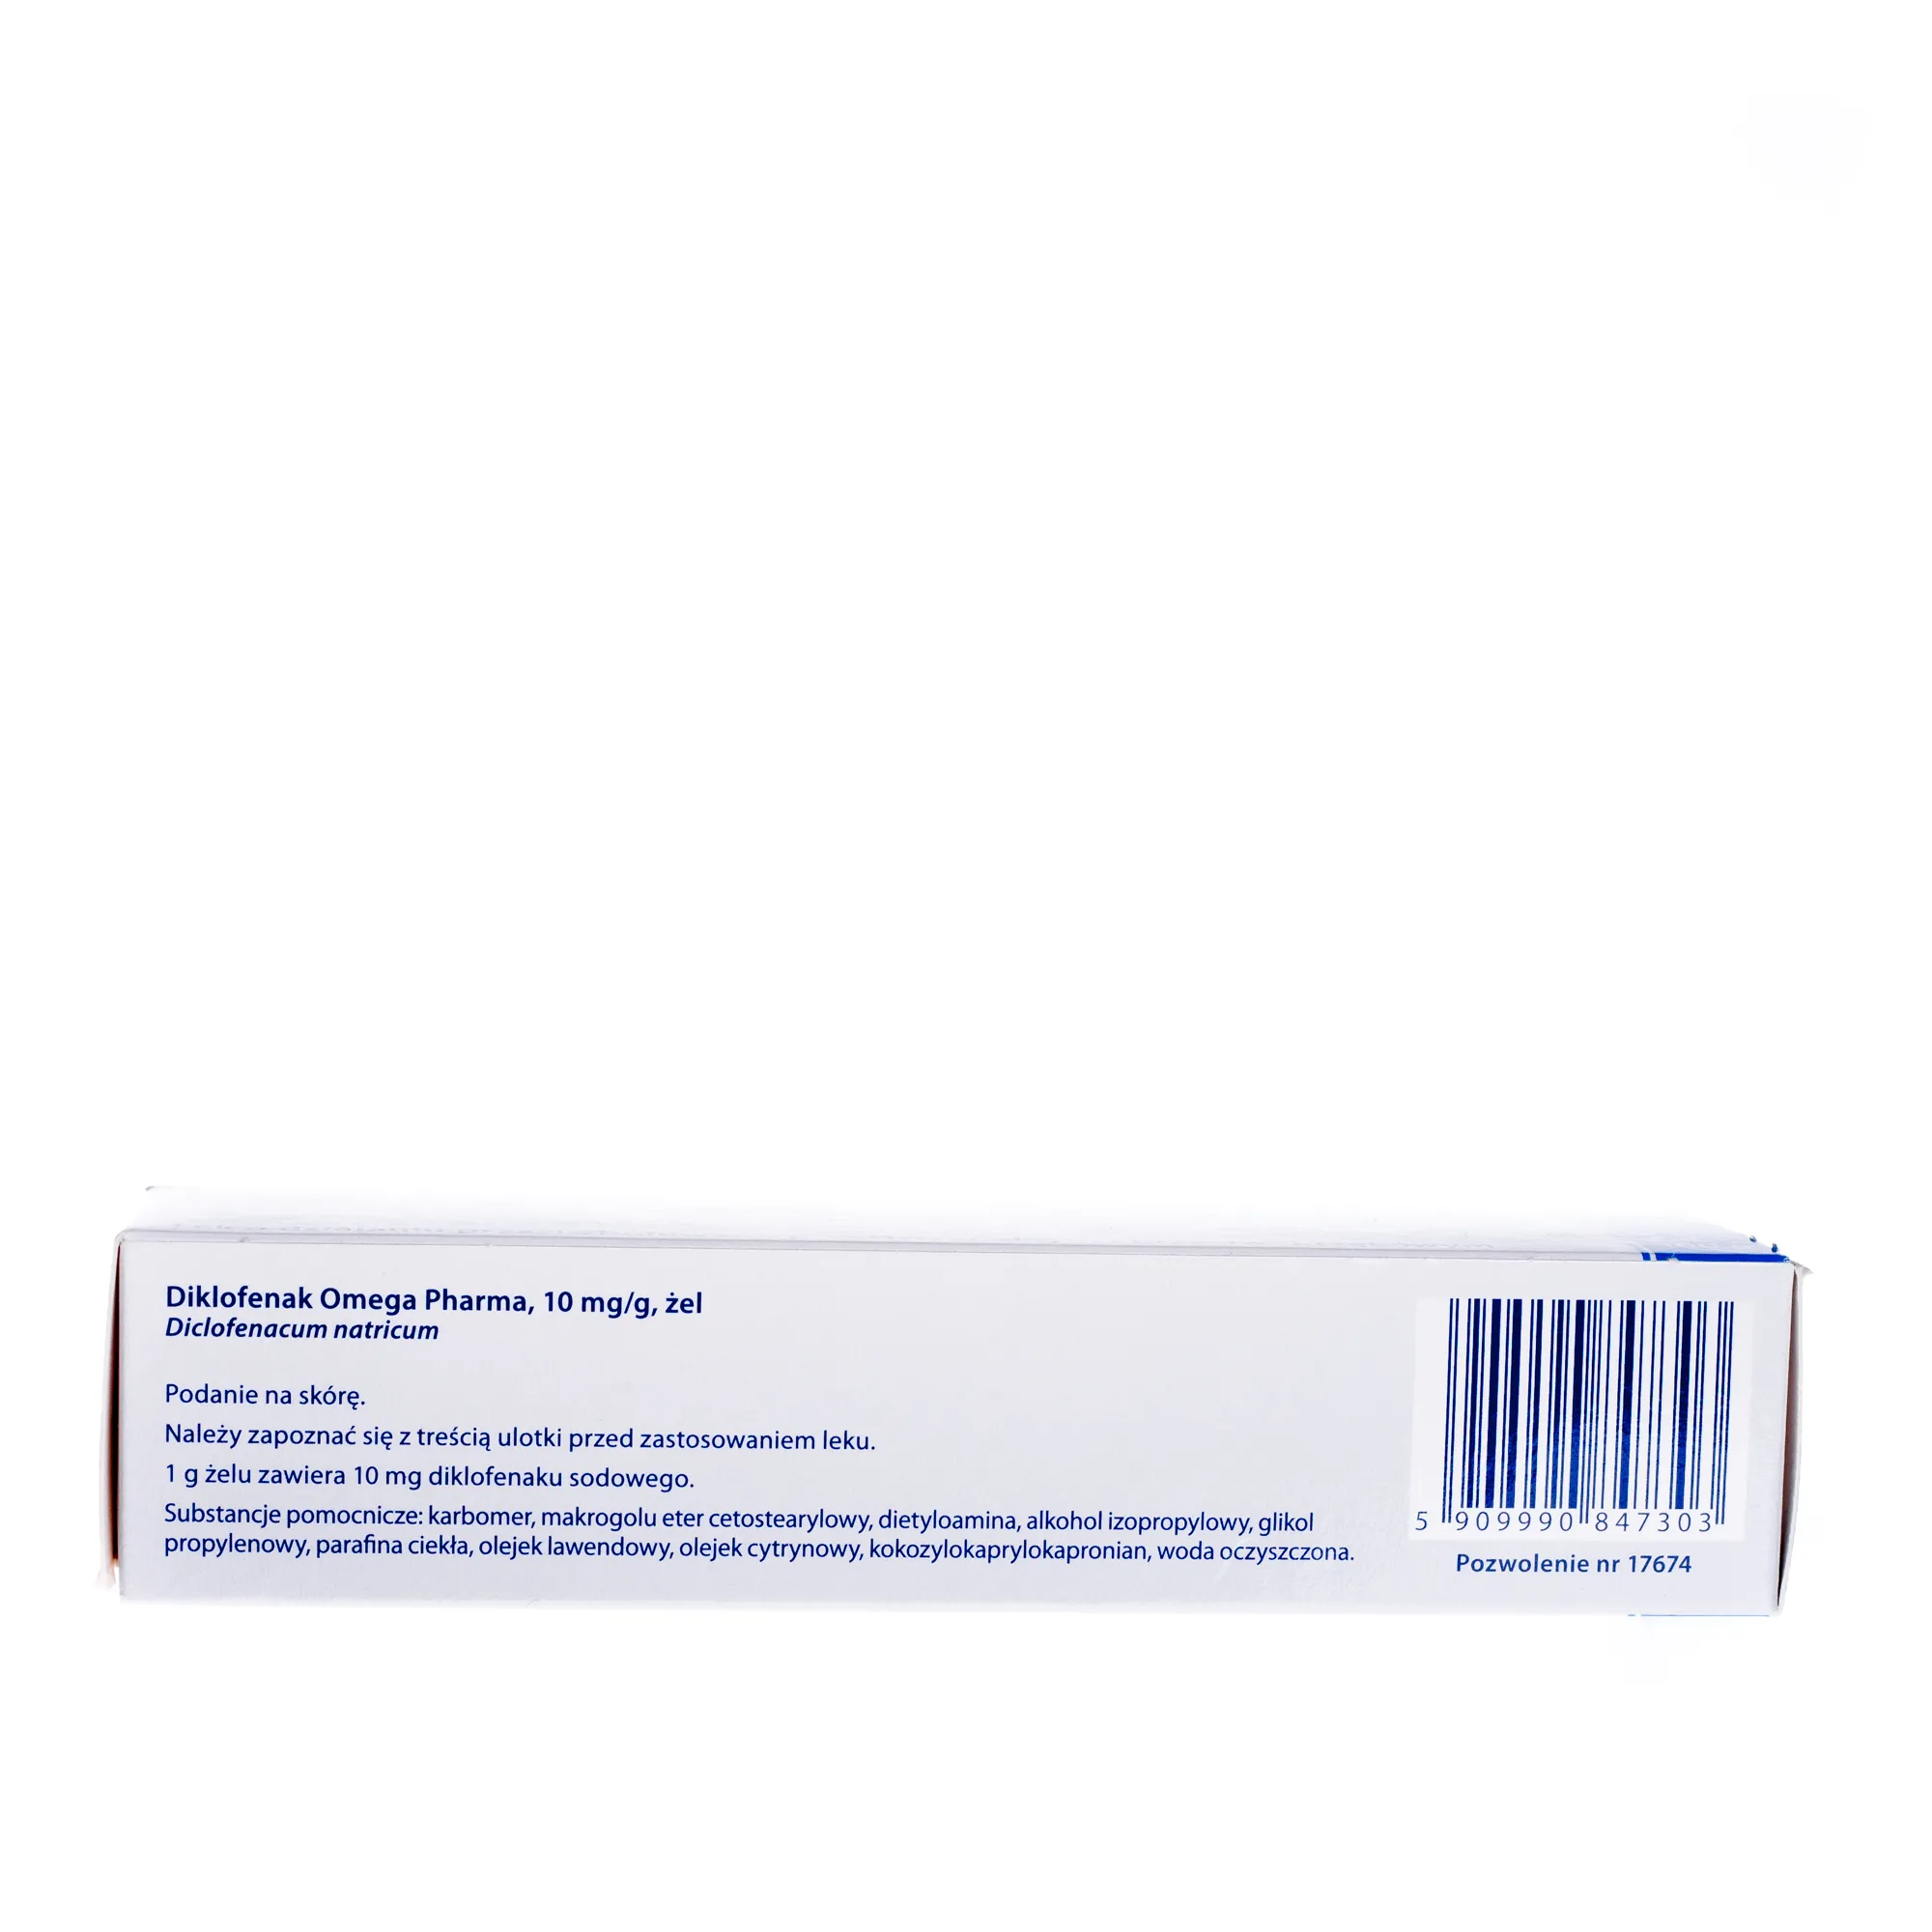 Diklofenak Omega Pharma 10 mg/g, żel 100g 